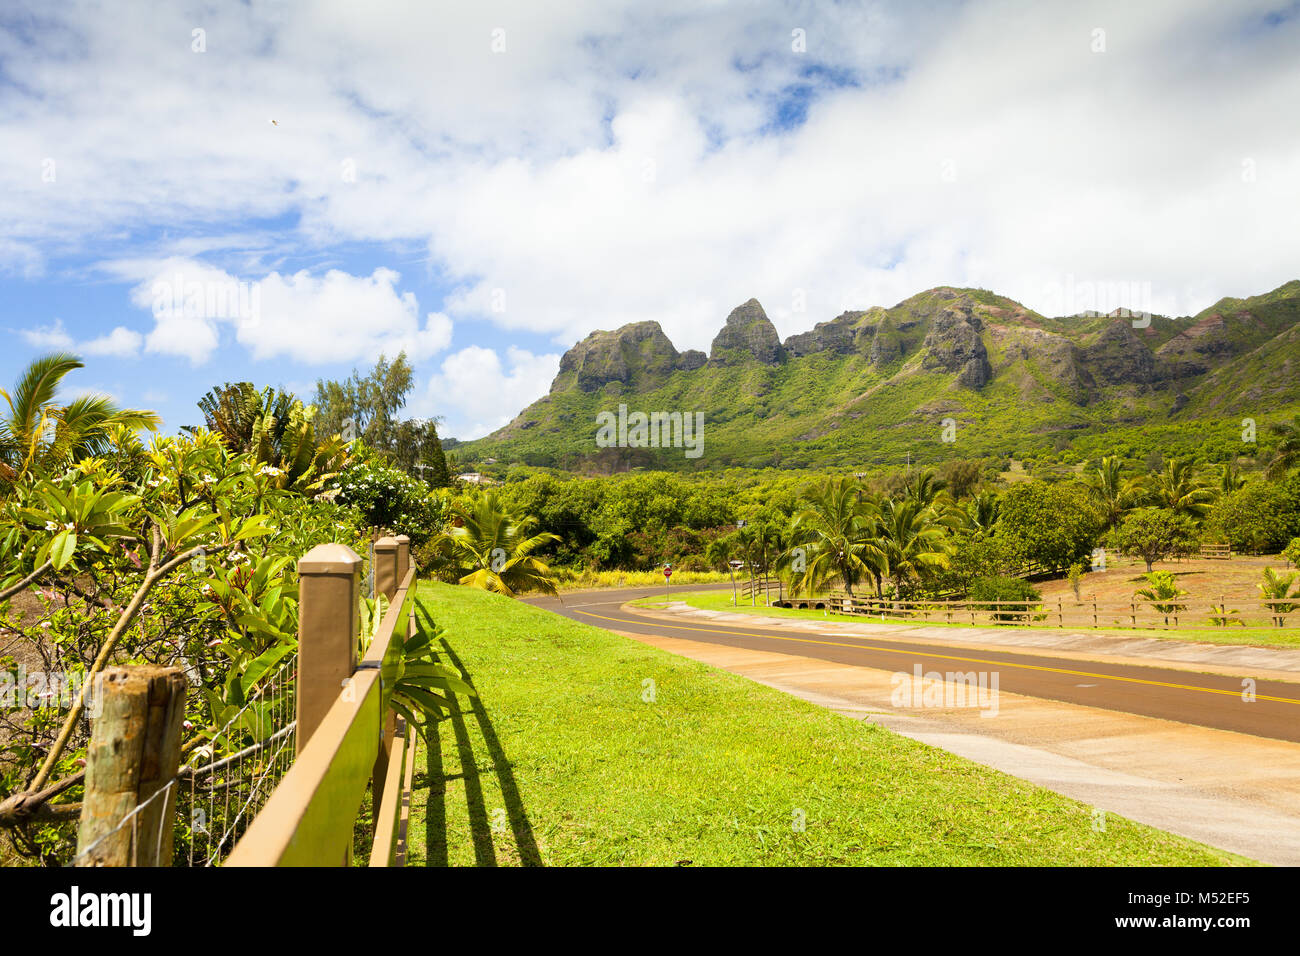 Hawaii kawaii kalalea montaña dentro de la isla de king kong Foto de stock